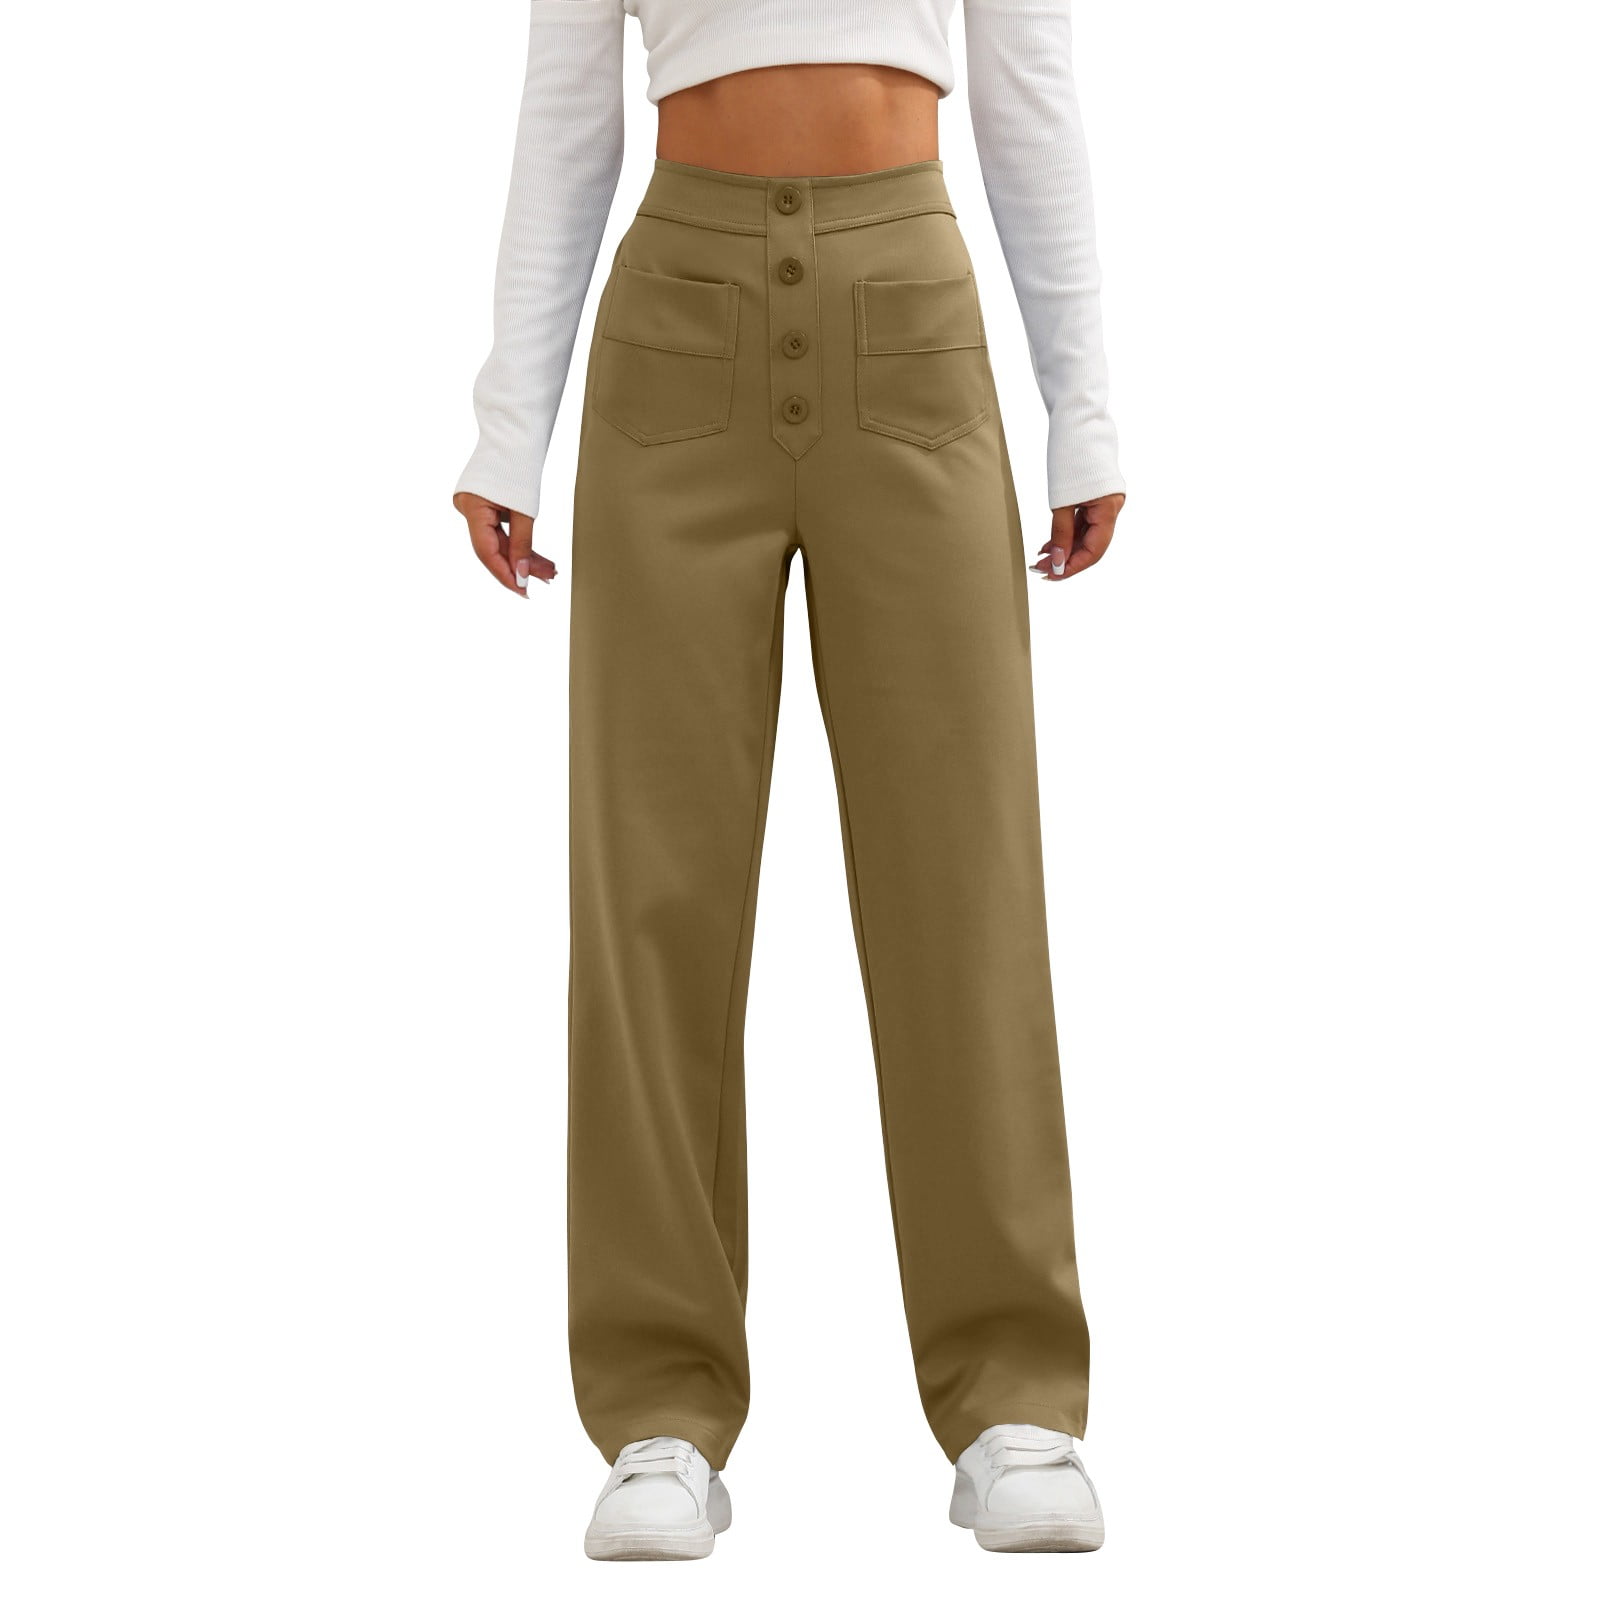 H&M plaid work trousers ☕️ Measurements: 28” waist,... - Depop